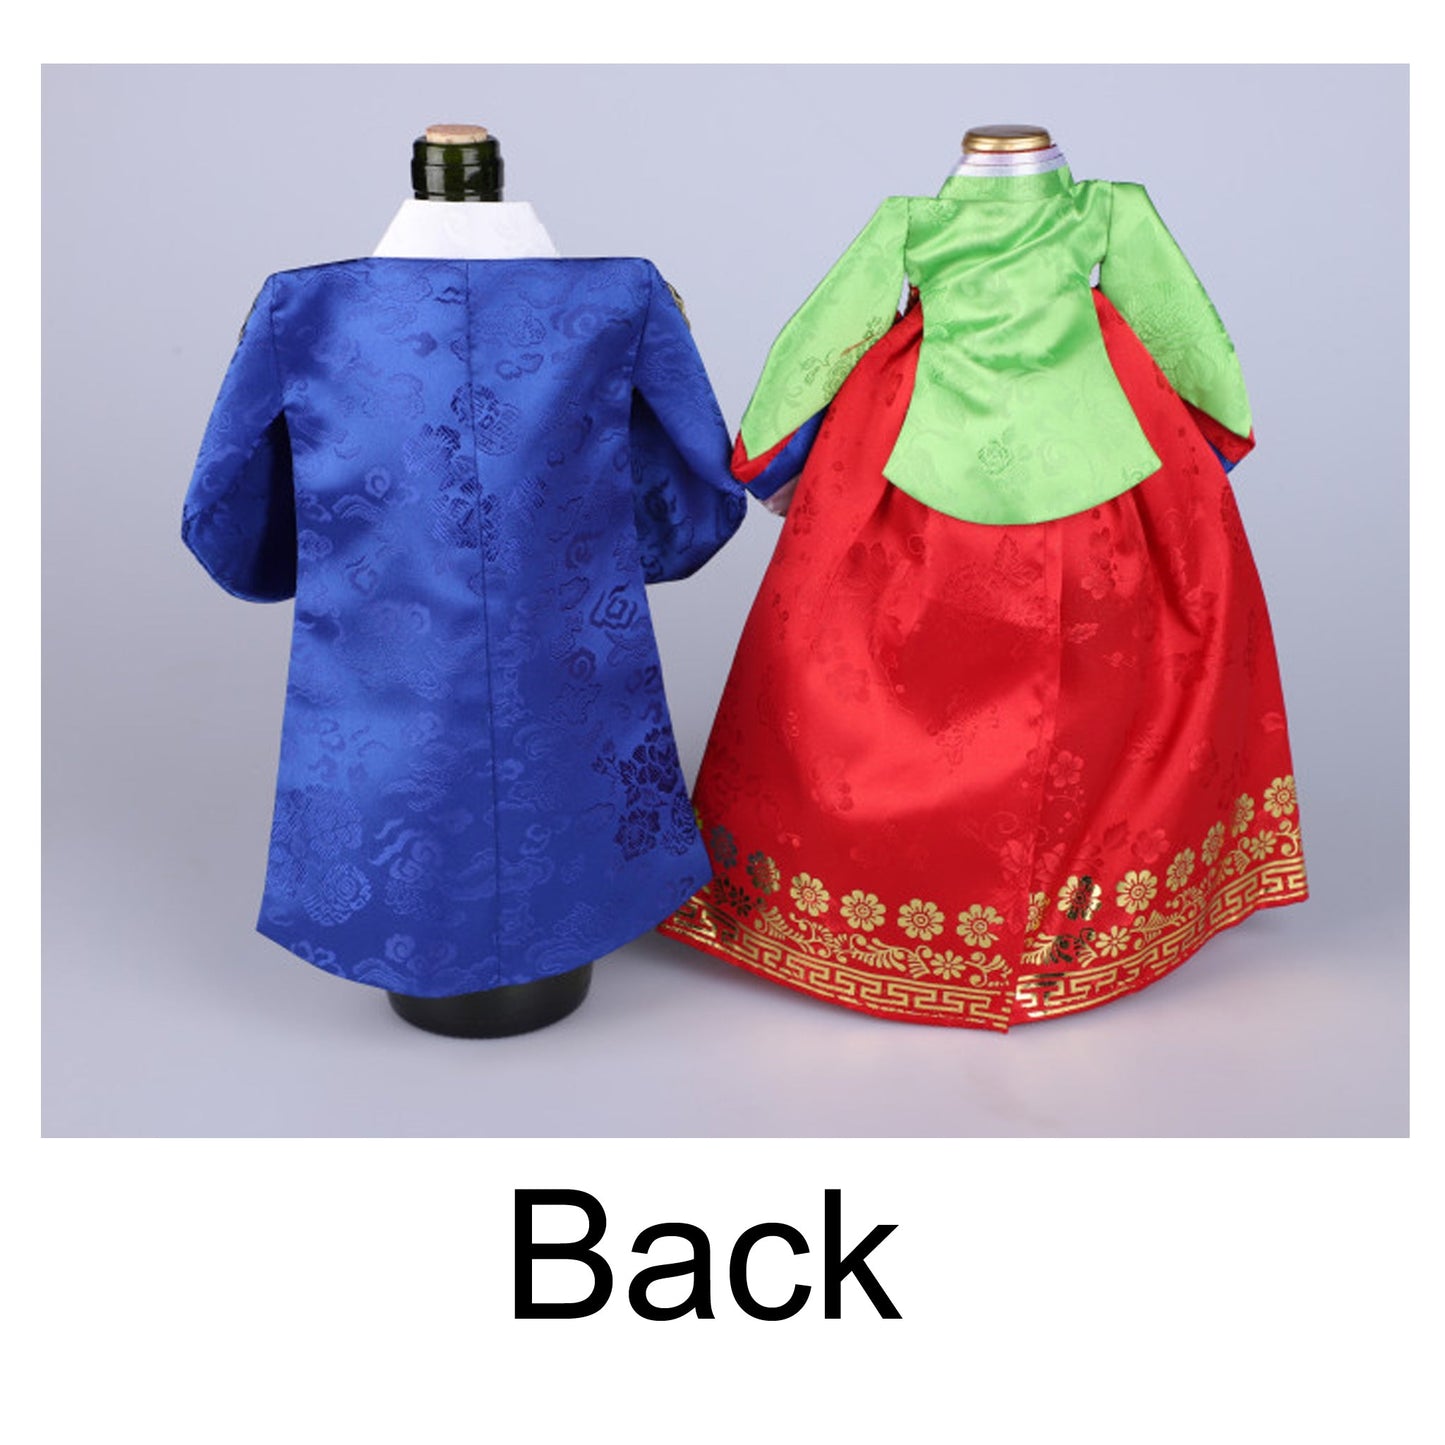 Bottle Cover, Wine Cover, Man Hanbok Design, Korean Traditional Cloth Design, Navy Color